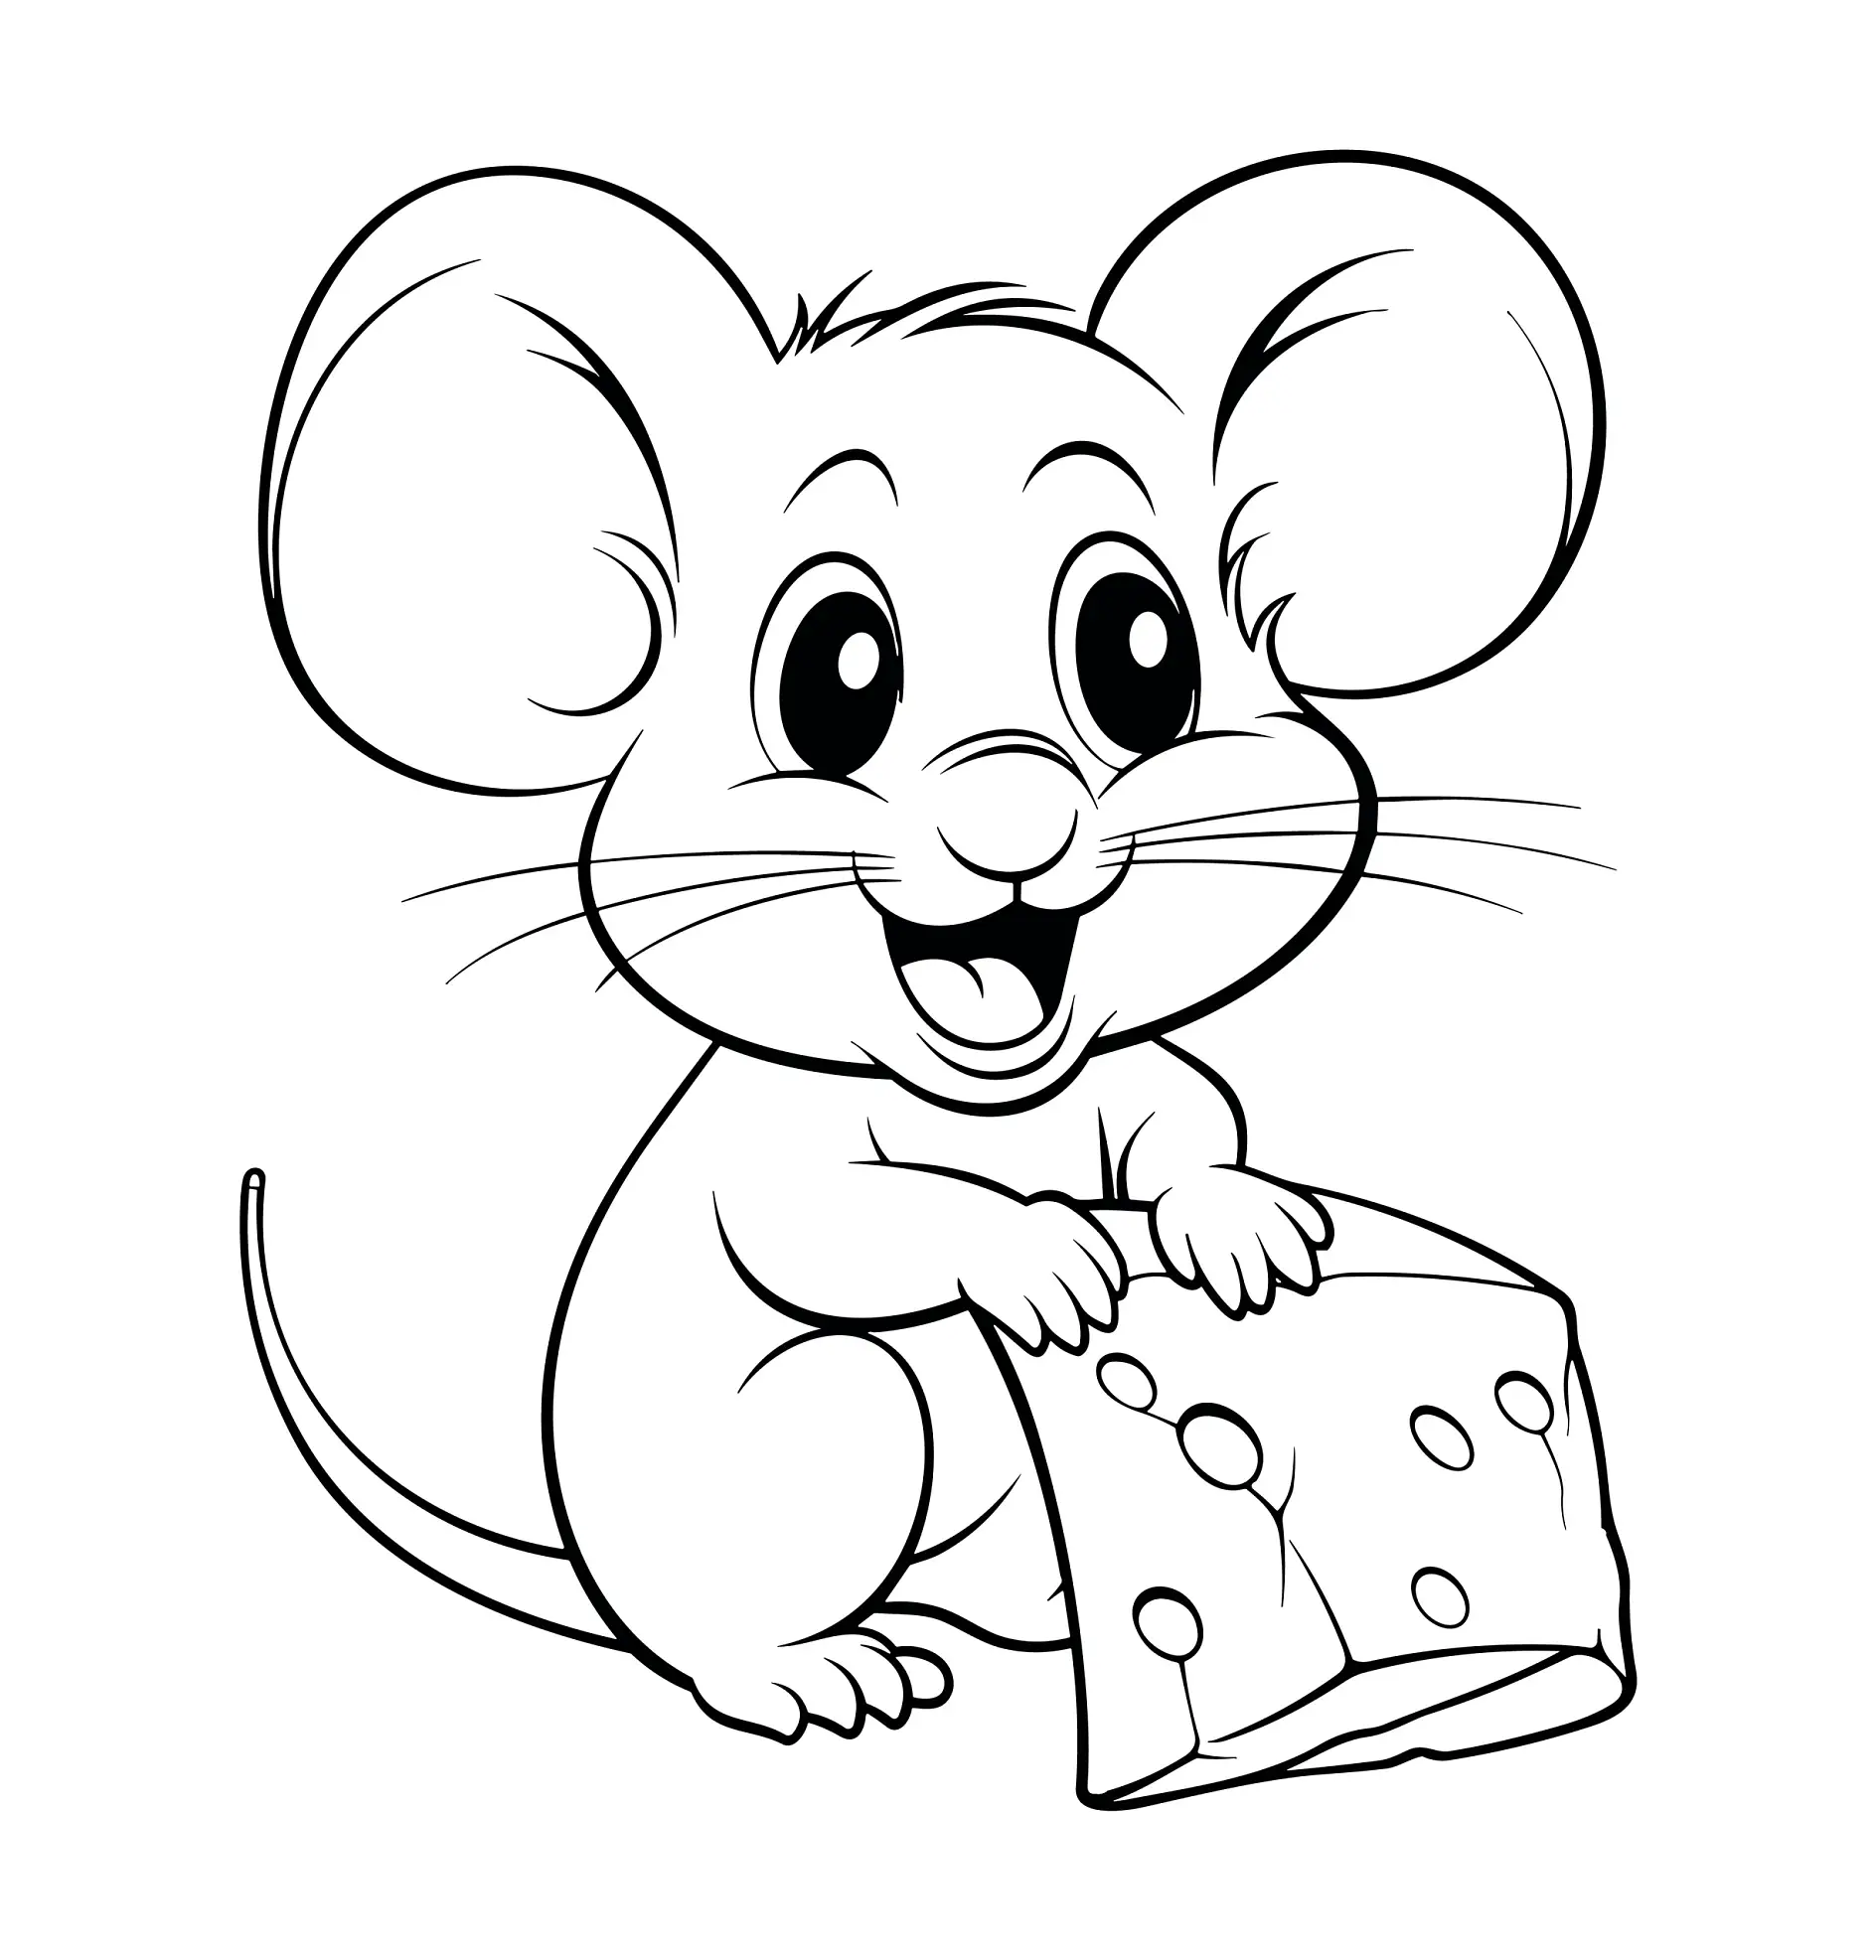 Ausmalbild Maus hält Käse und lächelt